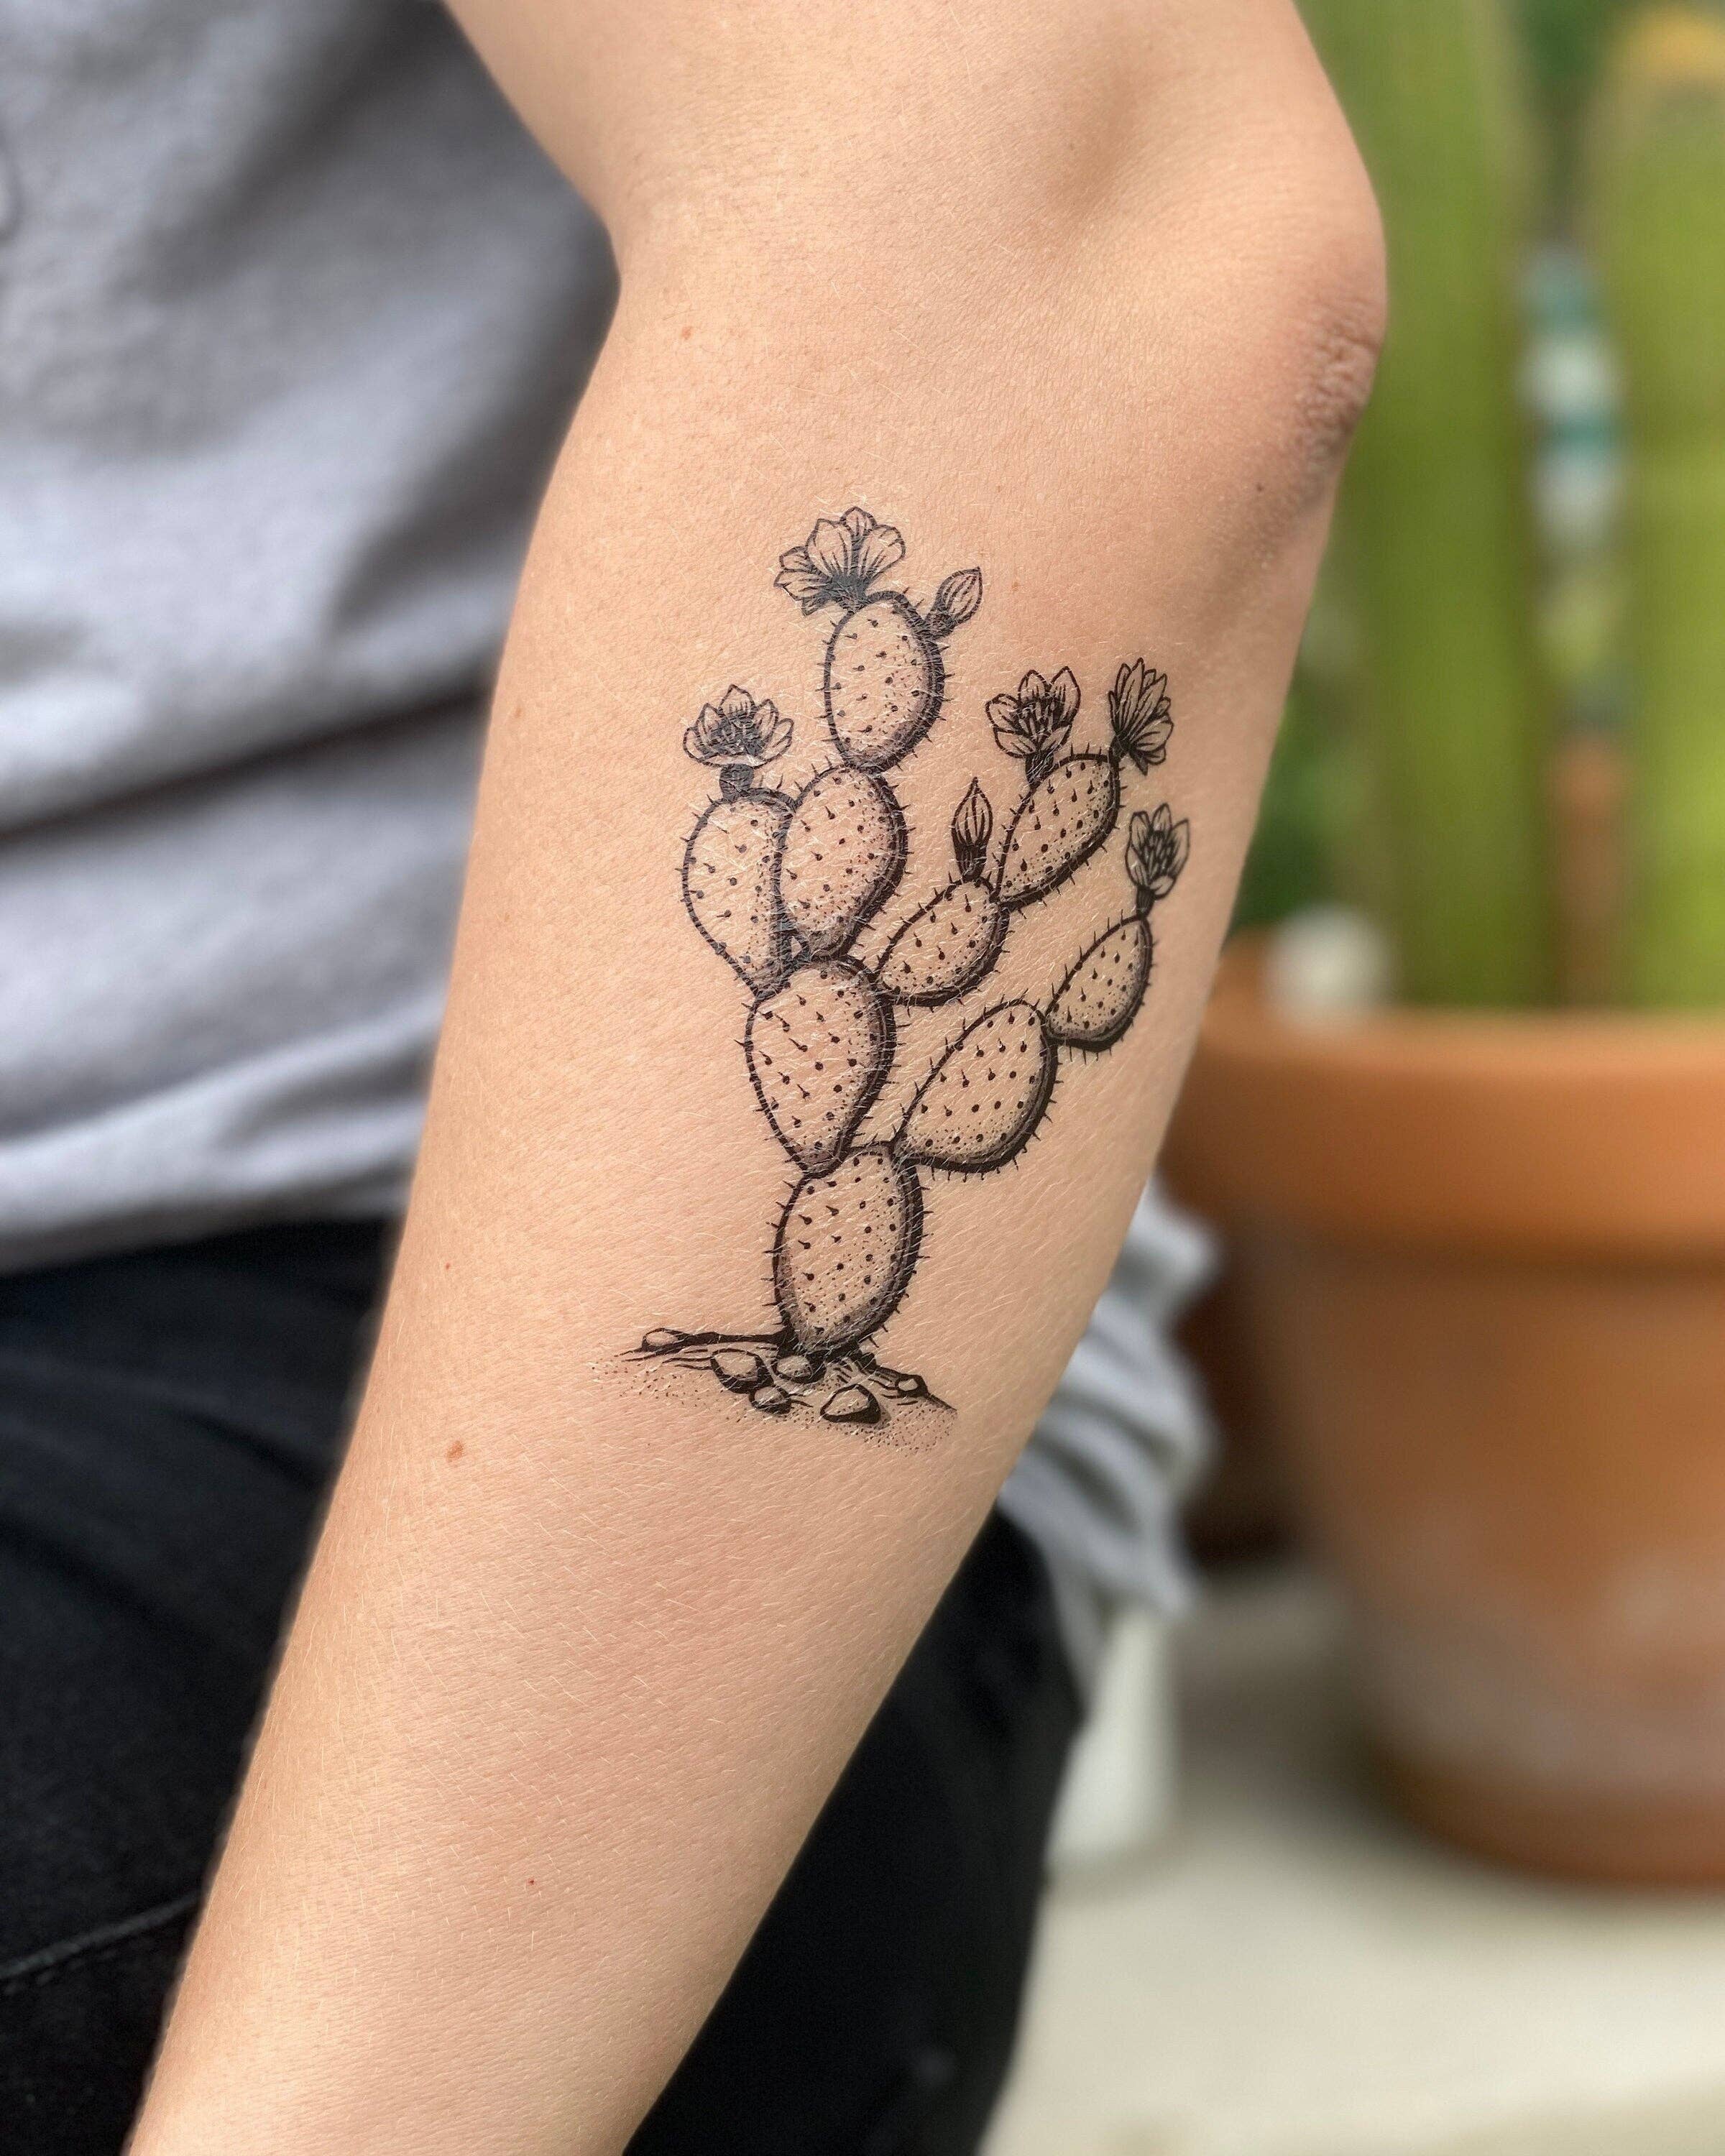 Cute cactus tattoo by Cagri Durmaz